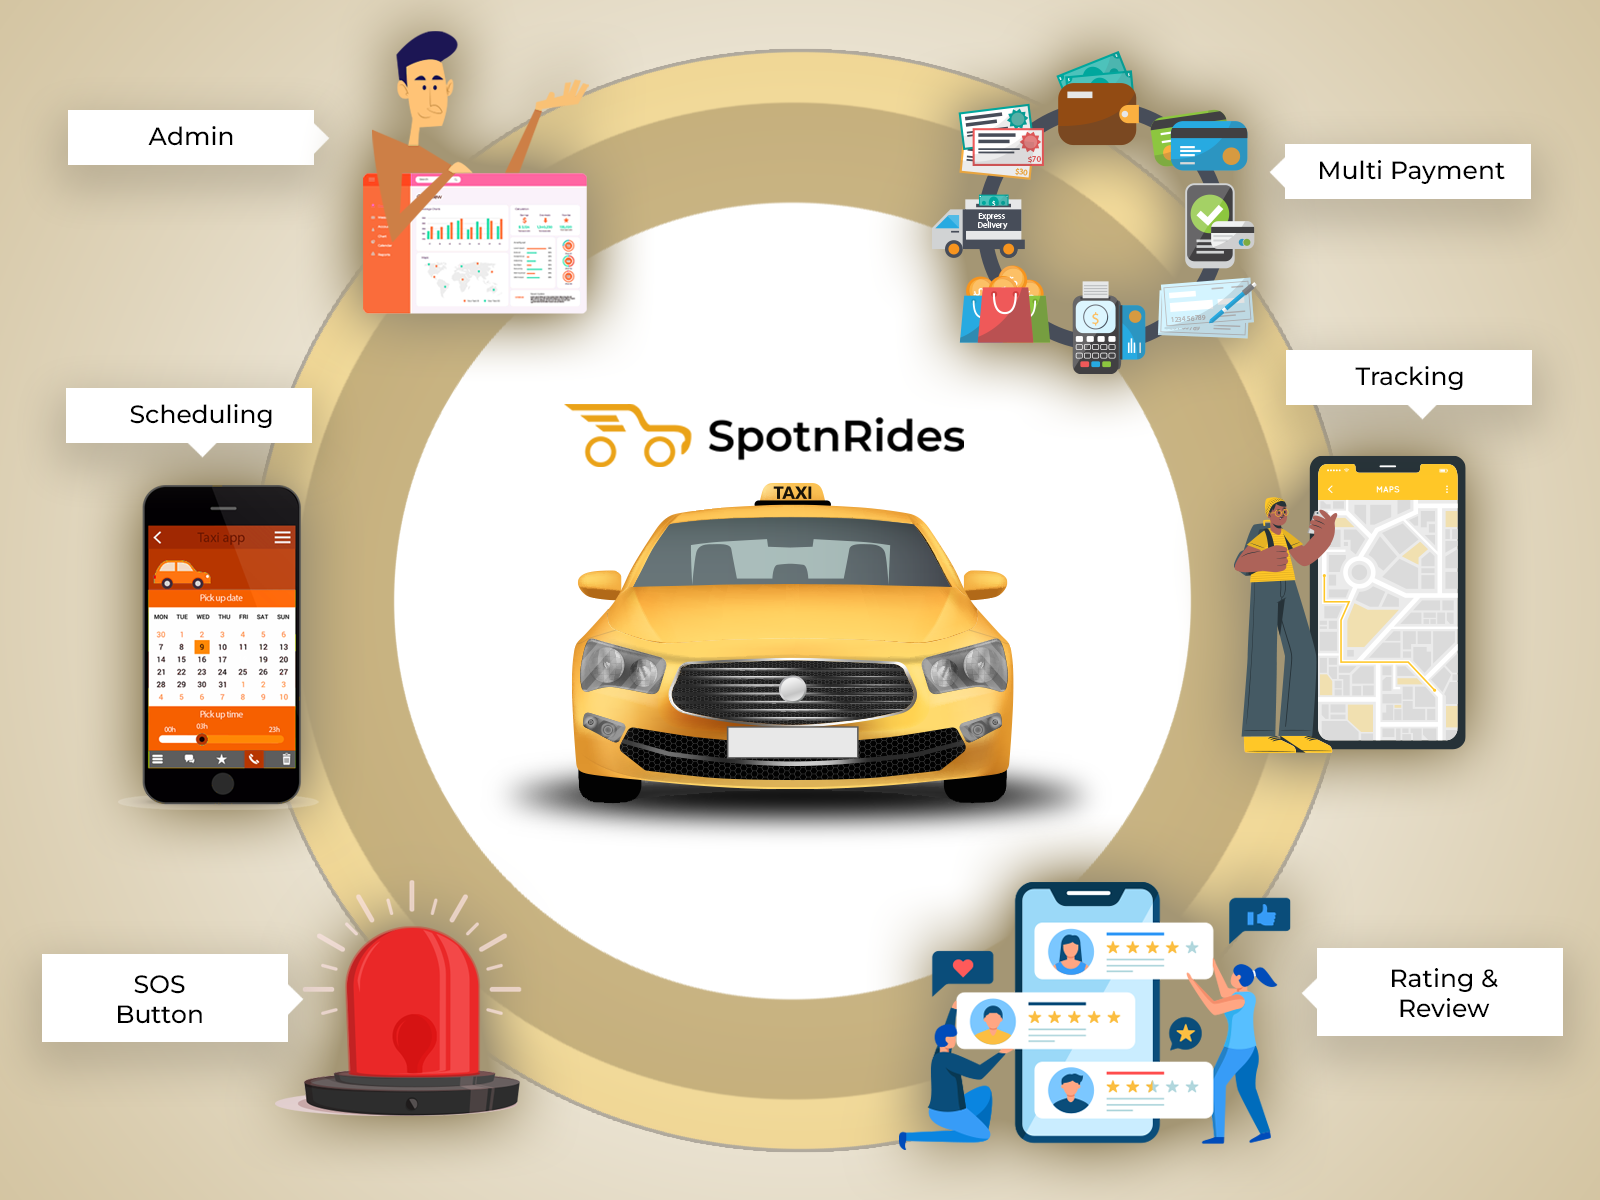 Taxi App Development Service like Uber -SpotnRides